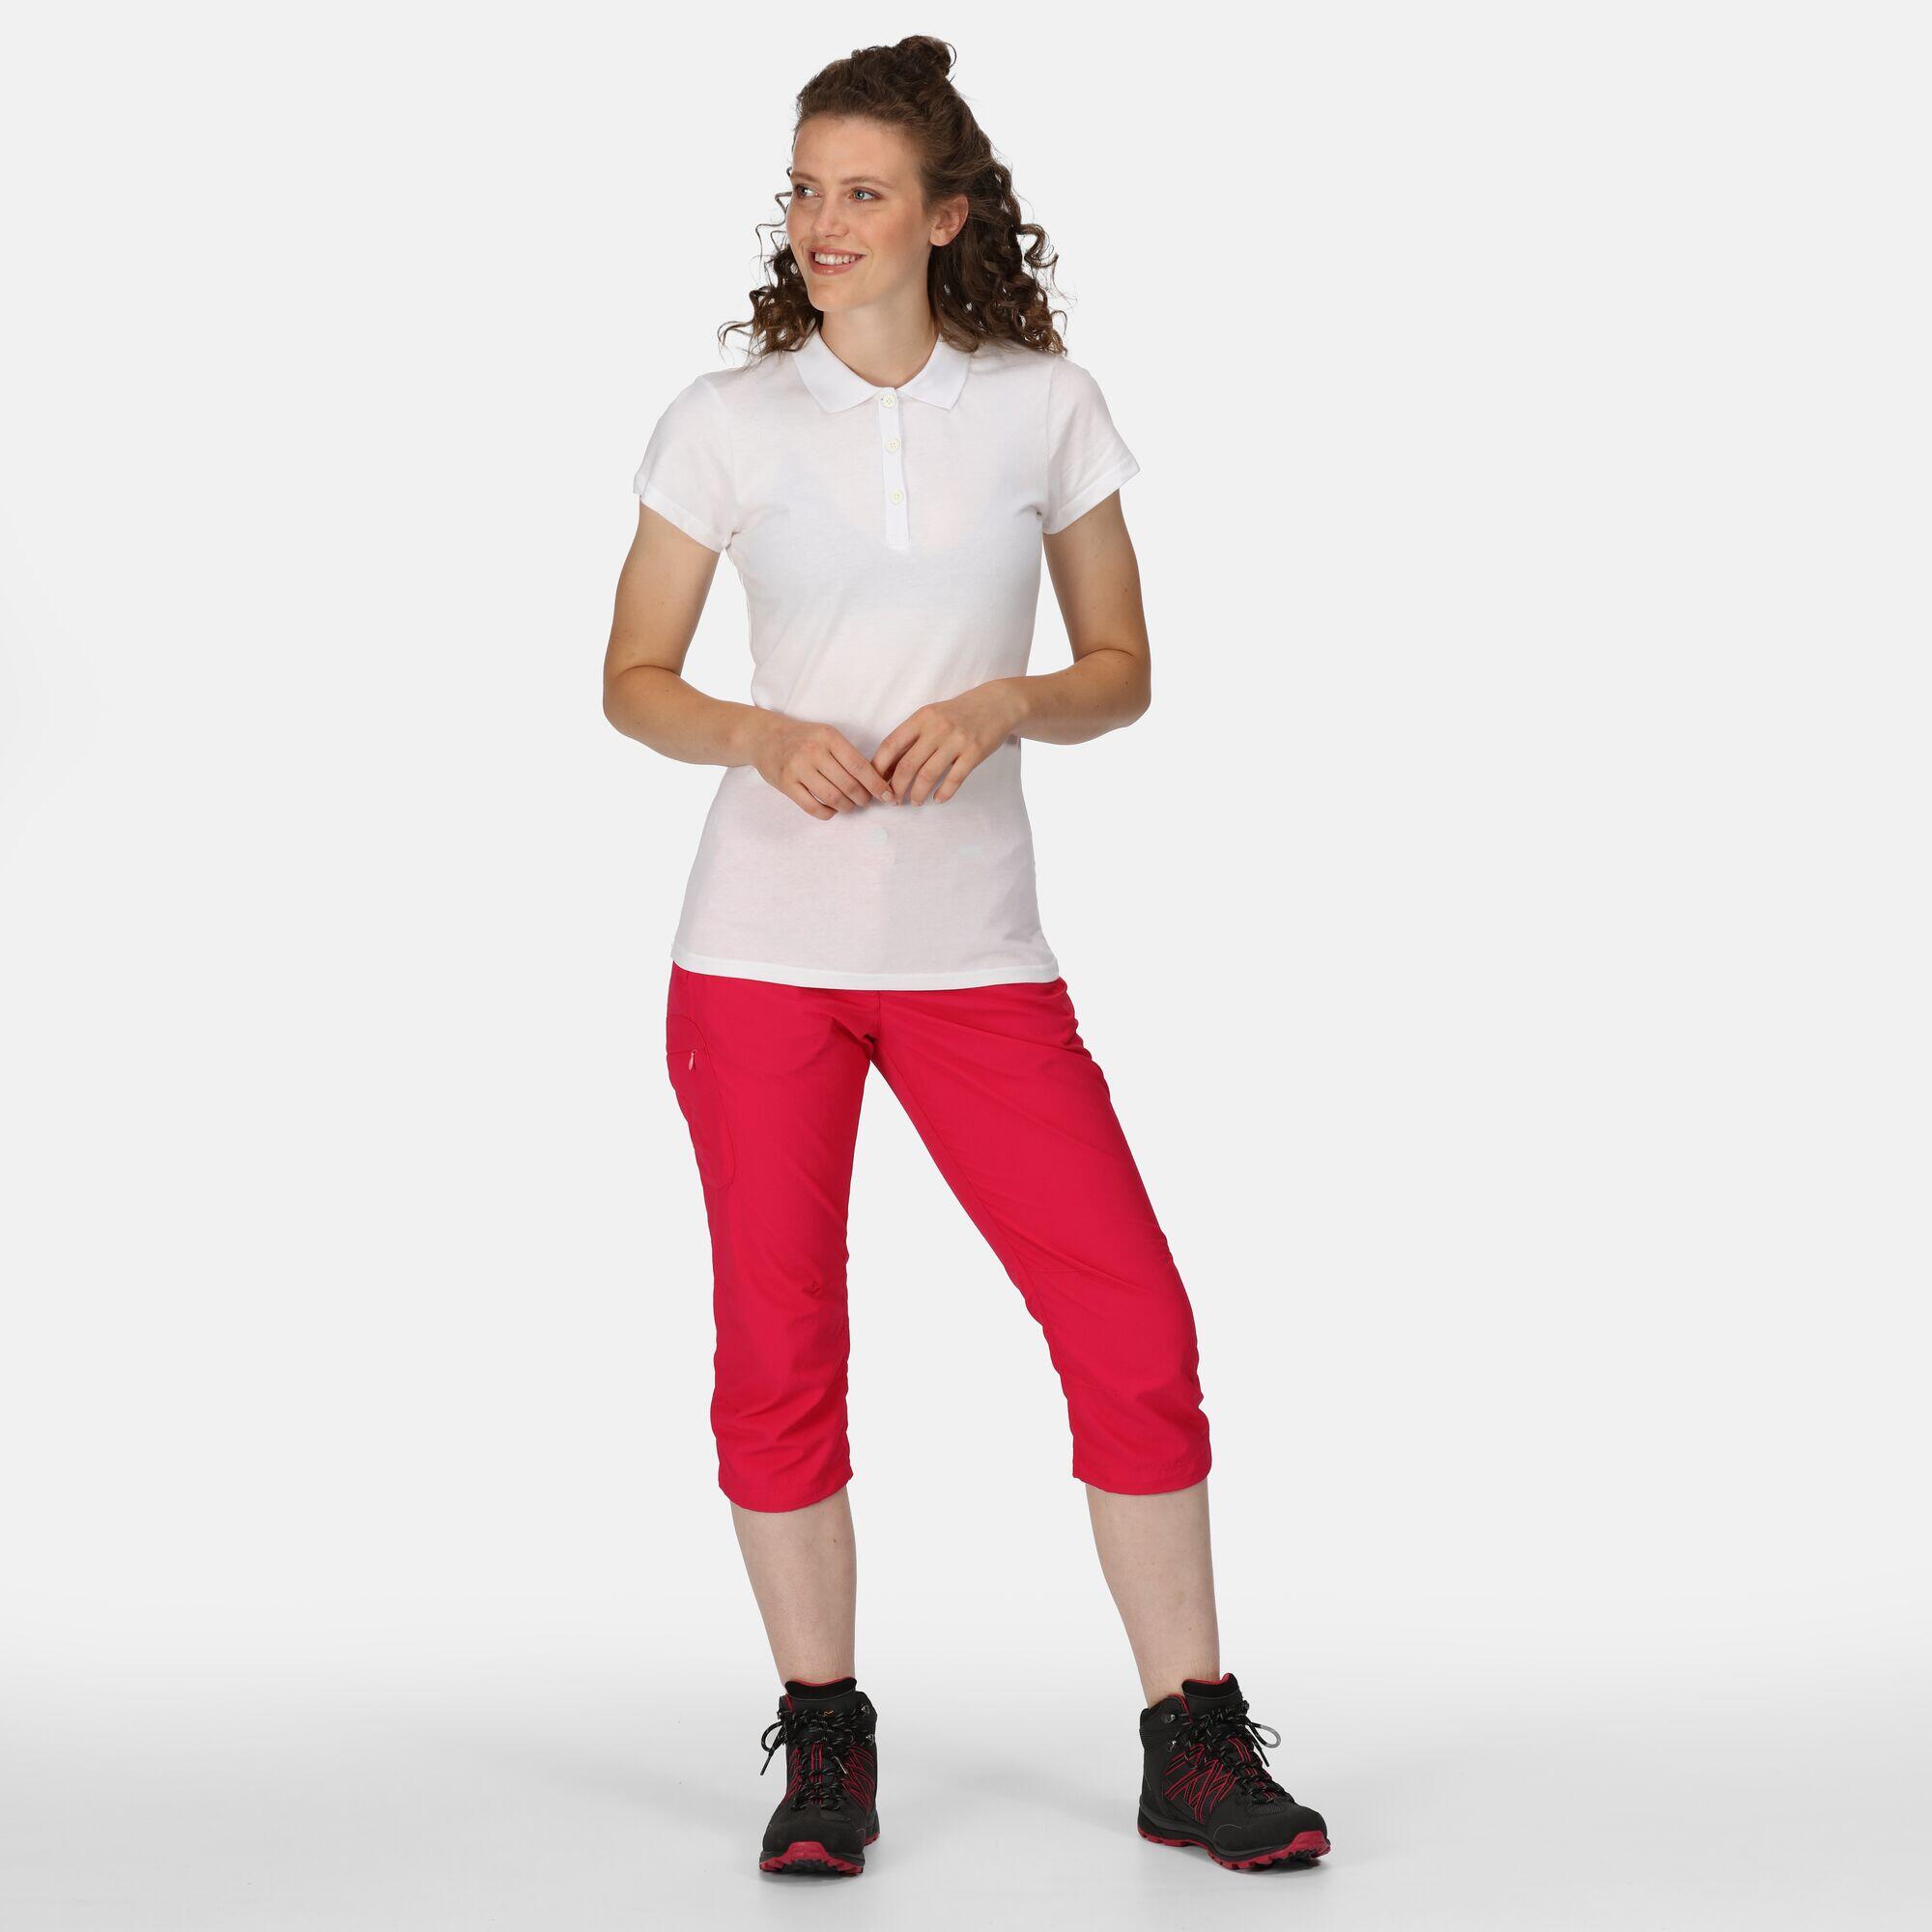 Sinton Women's Fitness T-Shirt - White 3/5